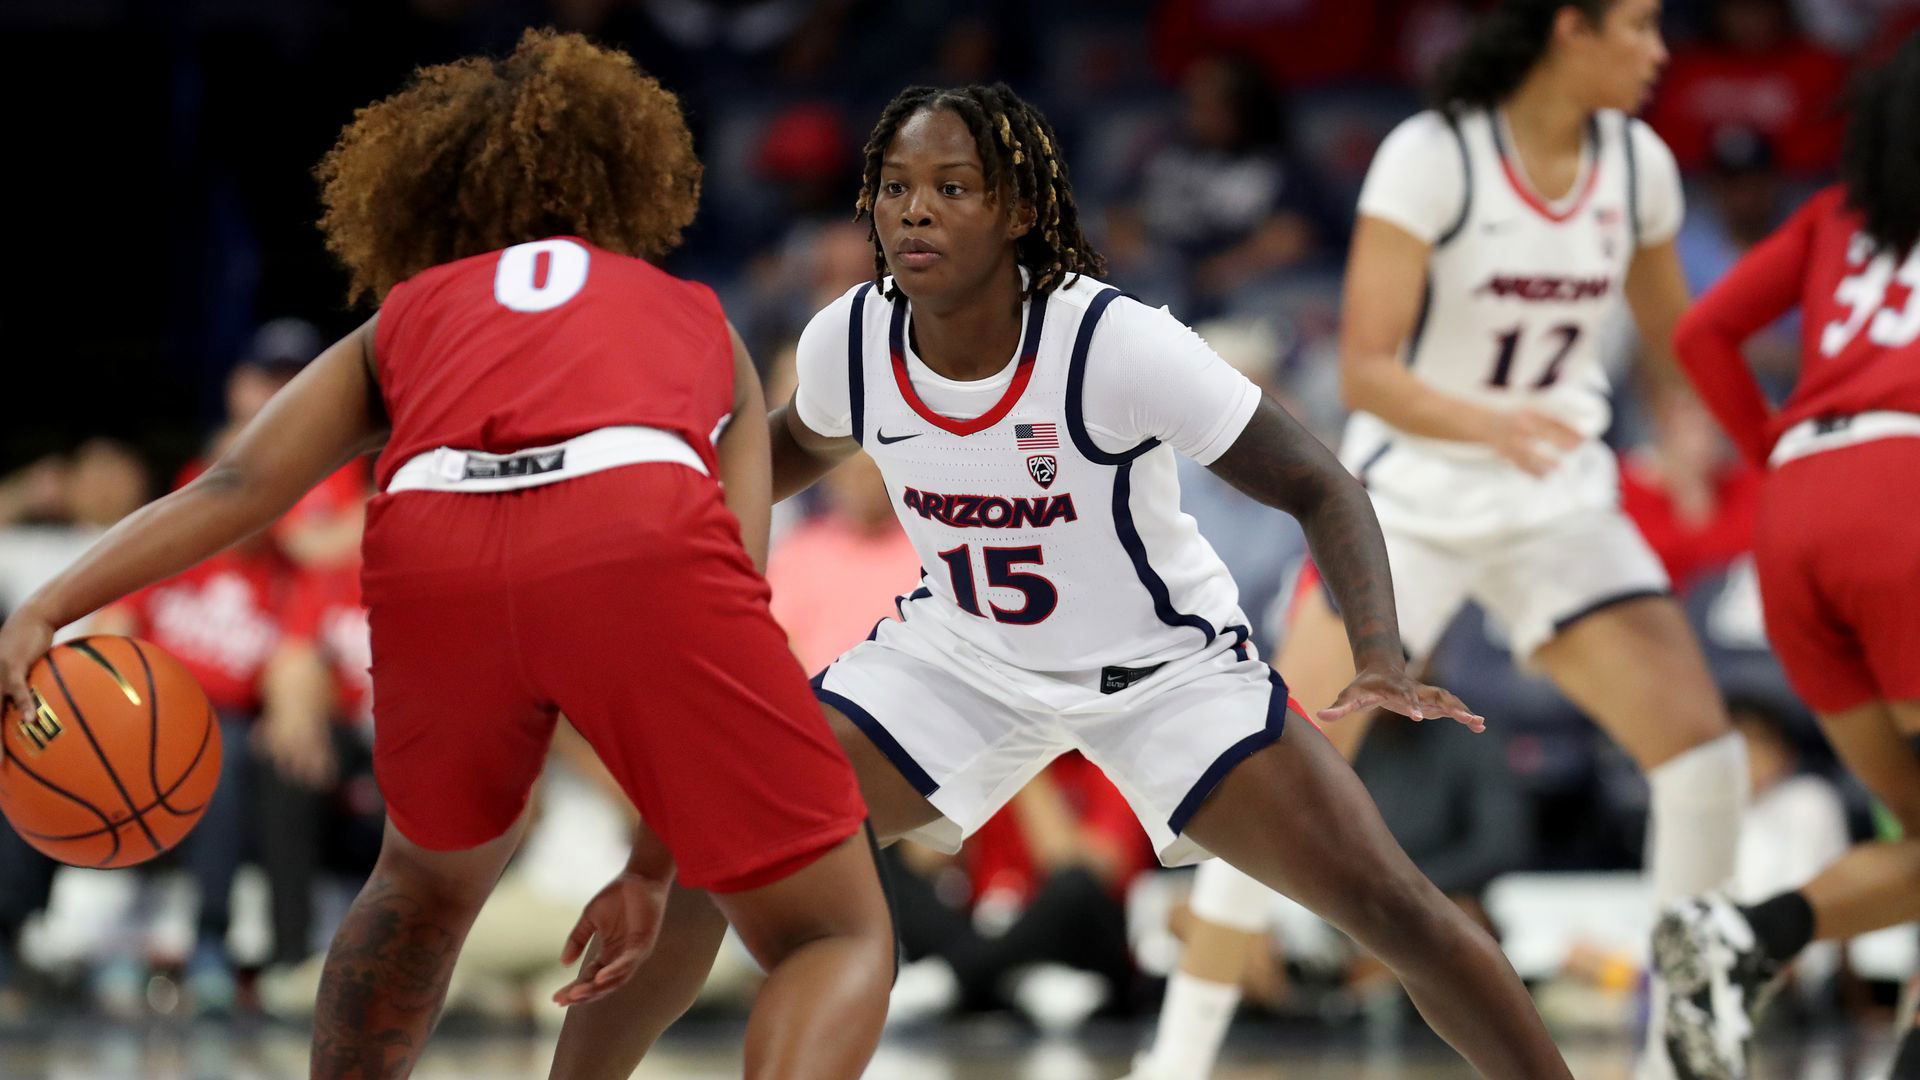 Arizona women’s basketball overcomes fouls trouble to defeat LMU